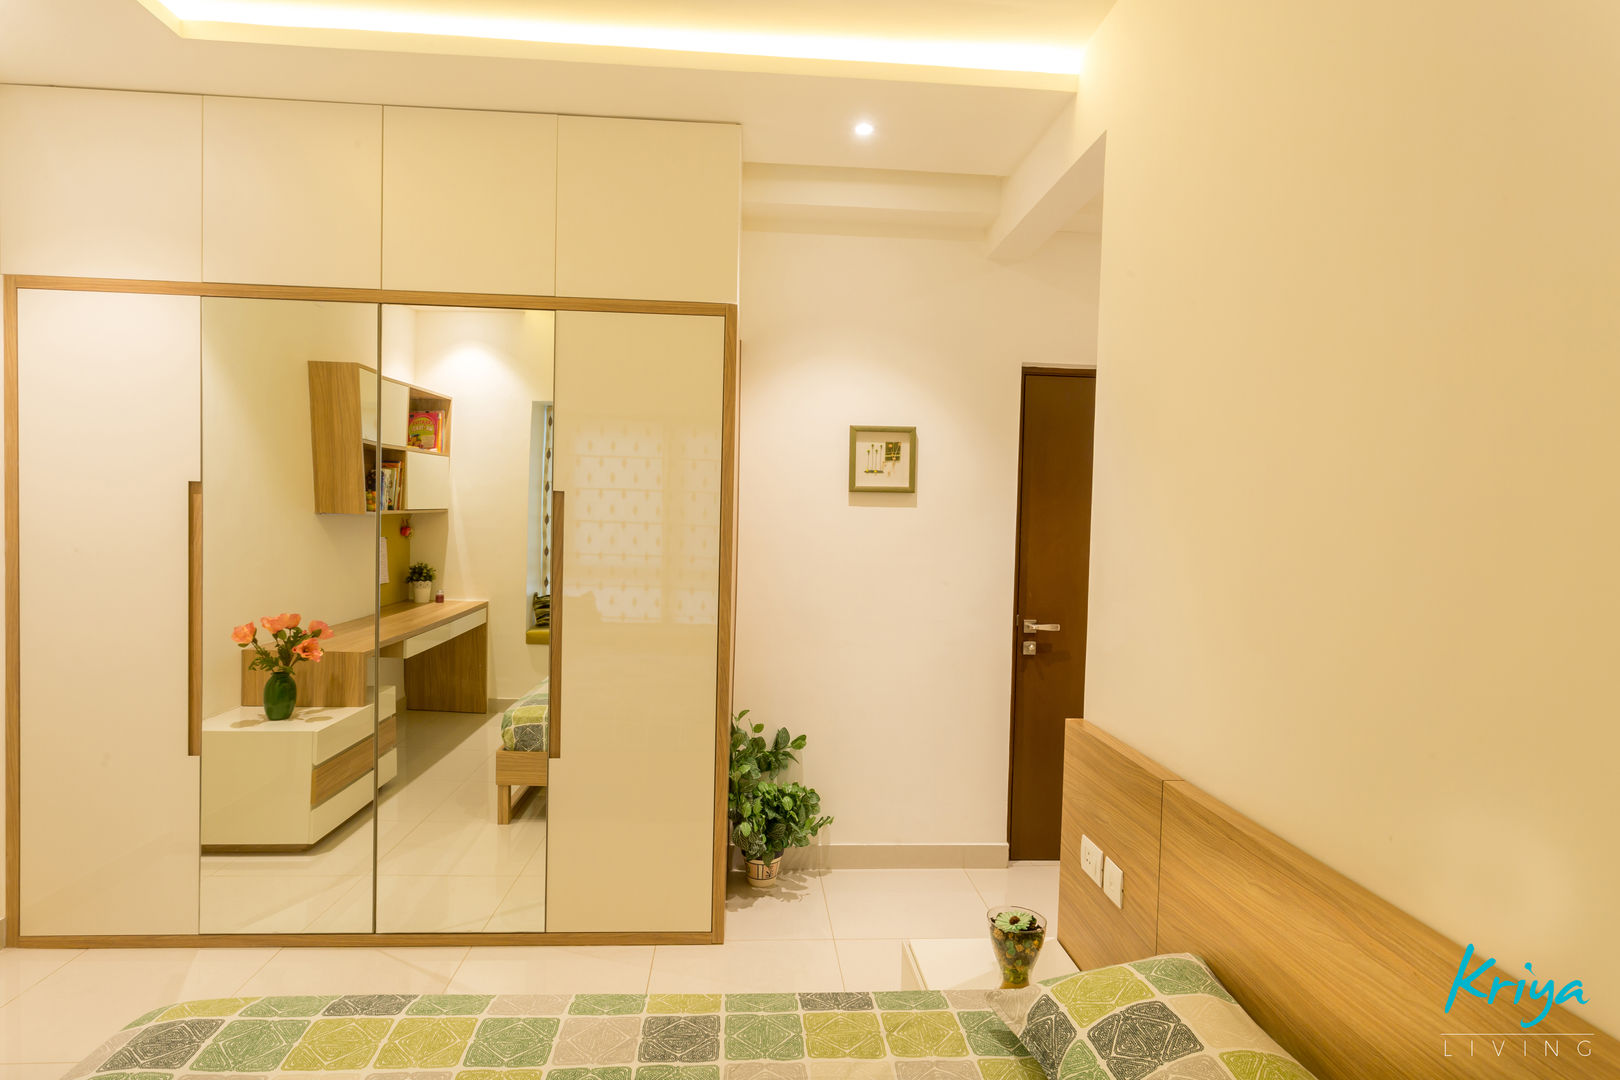 3 BHK apartment - RMZ Galleria, Bengaluru, KRIYA LIVING KRIYA LIVING Kamar Tidur Modern